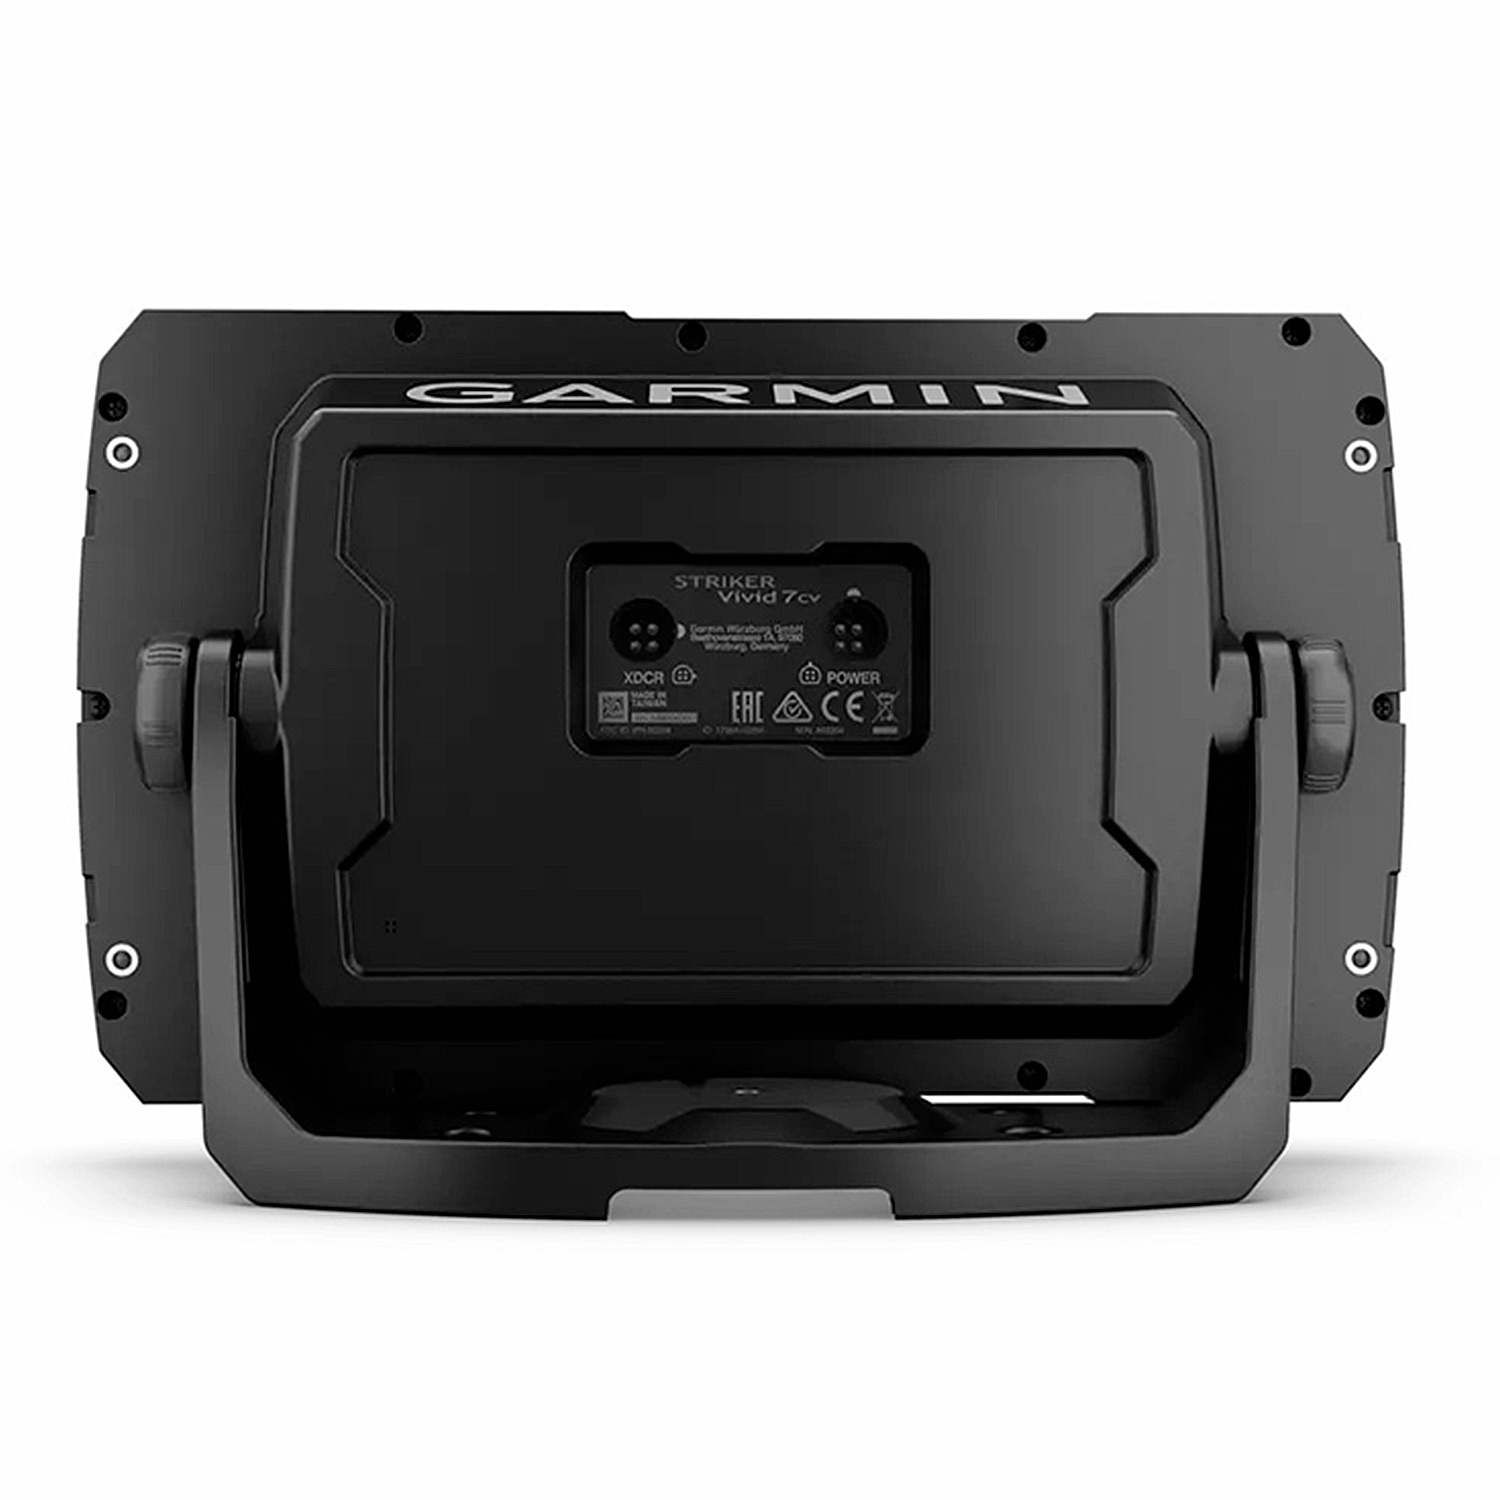 GPS Garmin Striker Vivid 7CV + Transdutor GT20-TM para Pesca - Preto